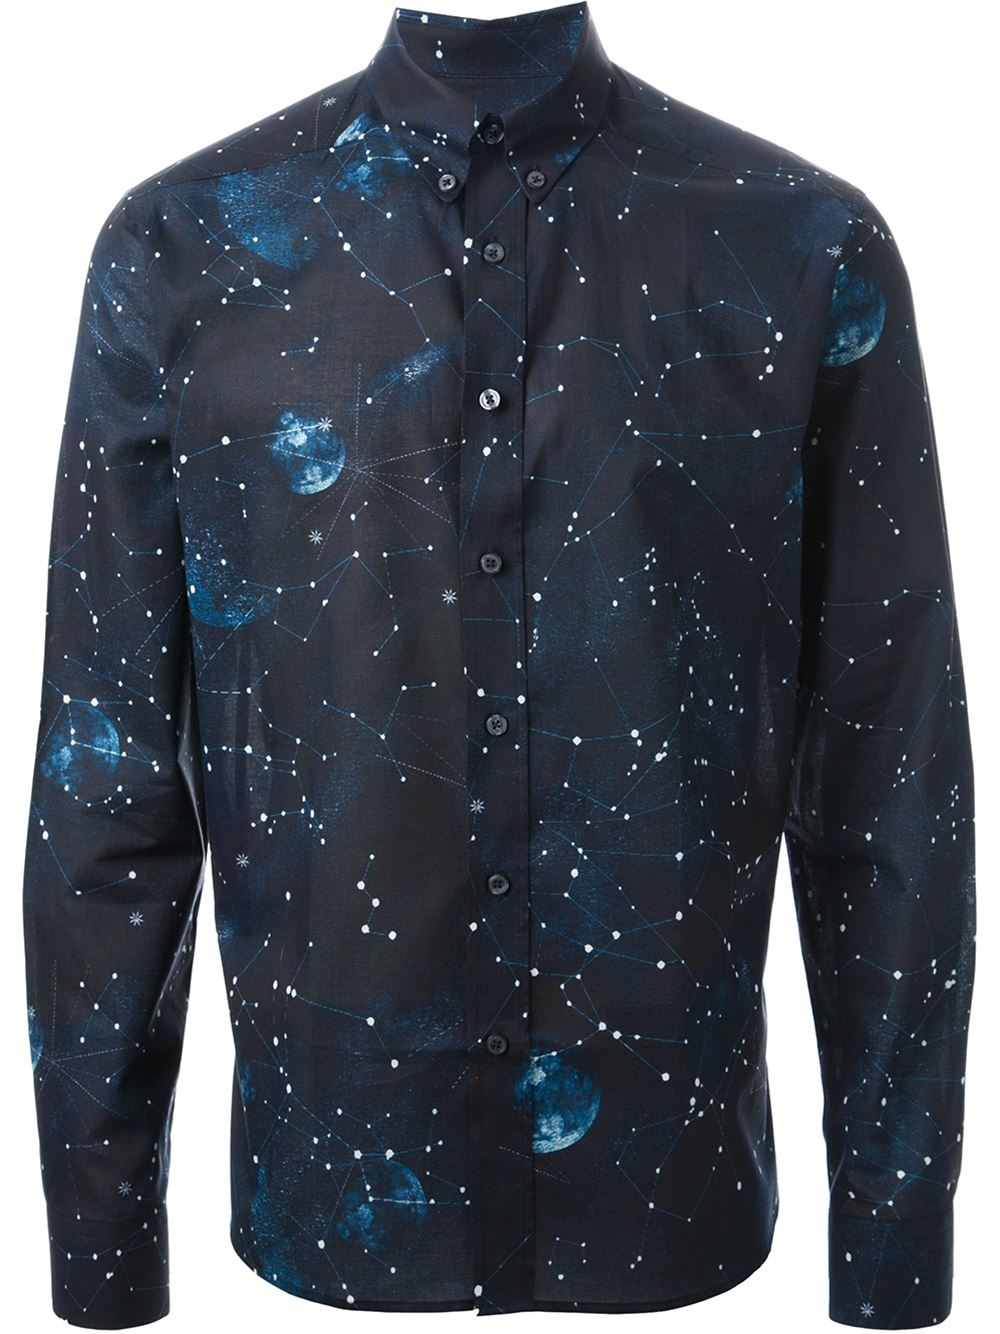 Paul Smith Galaxy Print Shirt in Blue for Men - Lyst